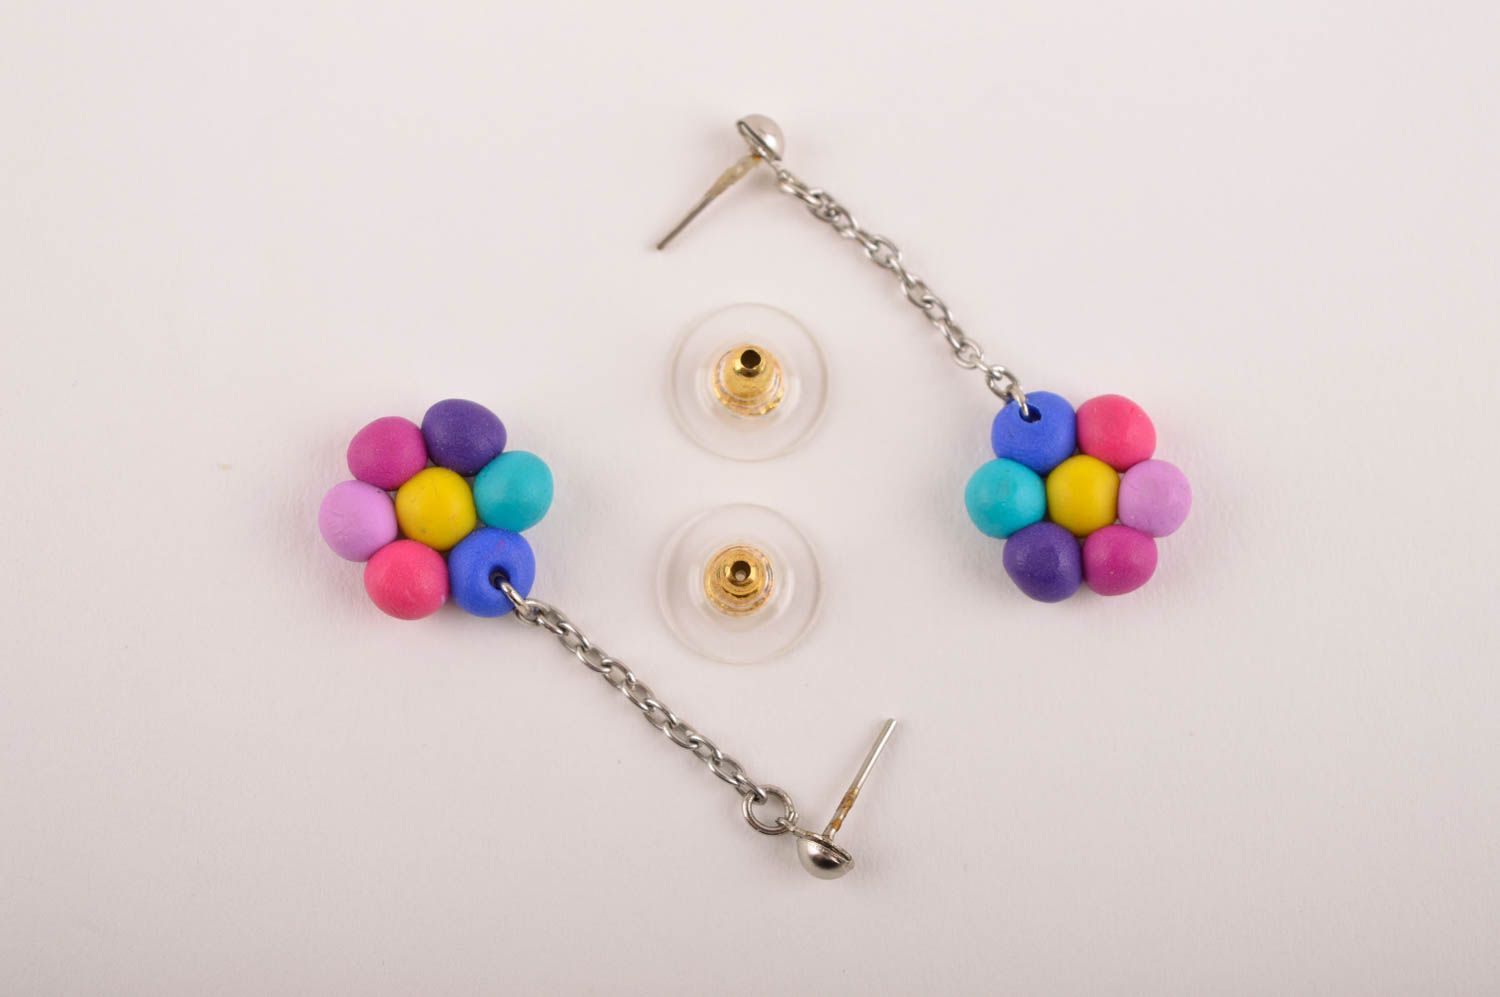 Handmade earrings designer earrings polymer clay jewelry unusual gift for women photo 5